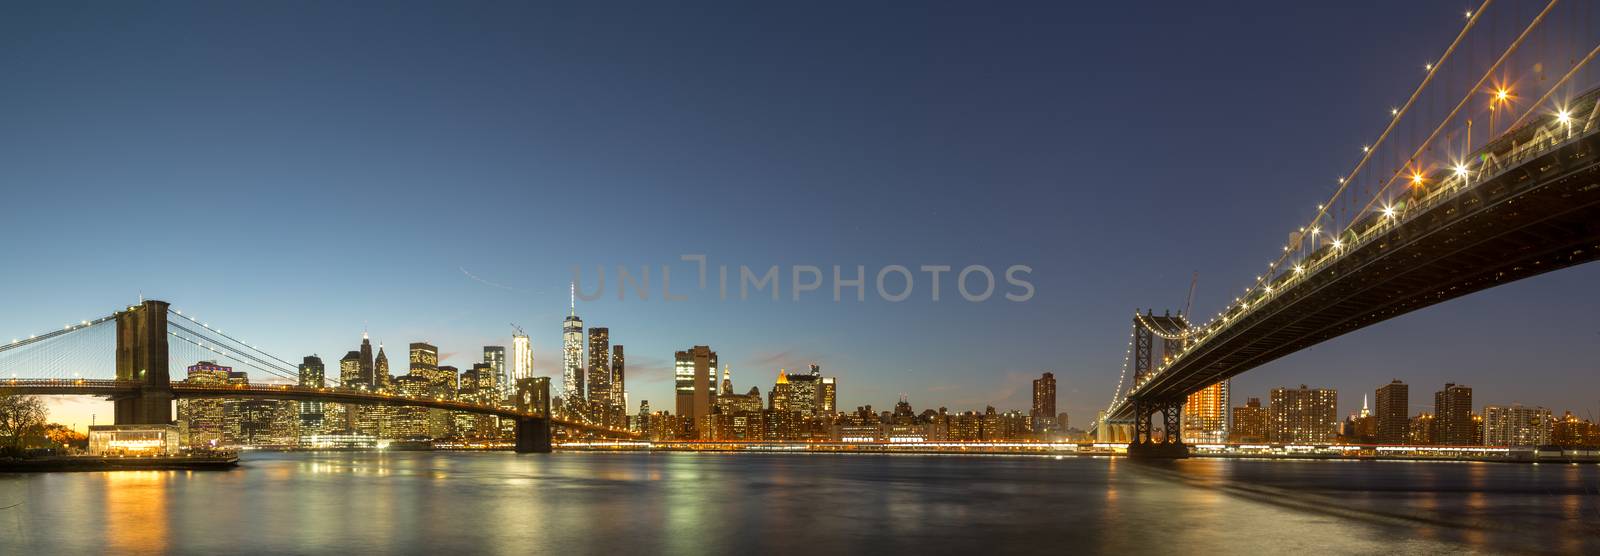 New York, United States of America - November 18, 2016: Skyline of Lower Manhattan and Brooklyn Bridge during sunset time